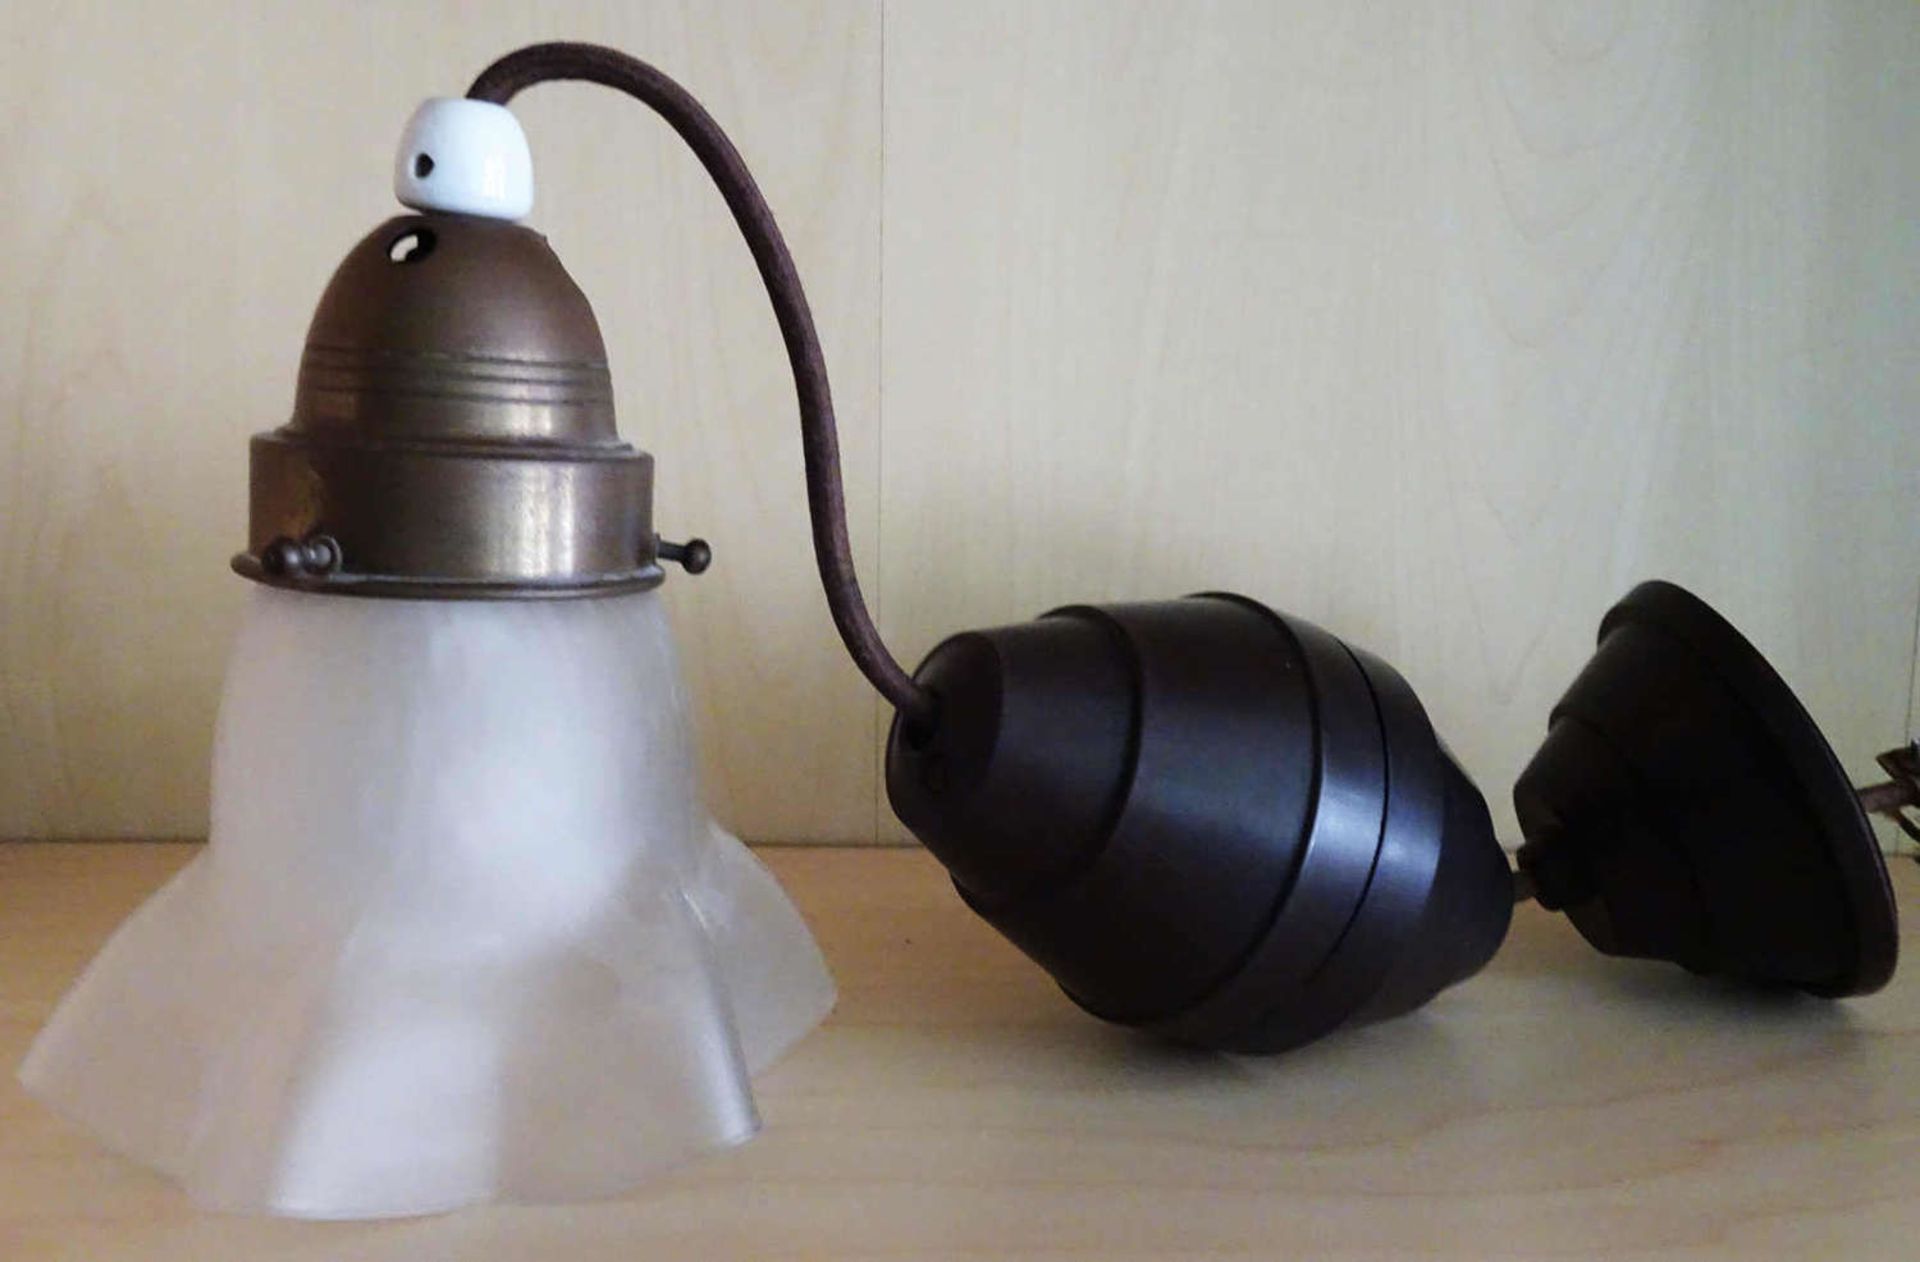 1 Jugendstil Hängelampe mit Milchglasschirm. Guter Zustand1 Art Nouveau hanging lamp with frosted